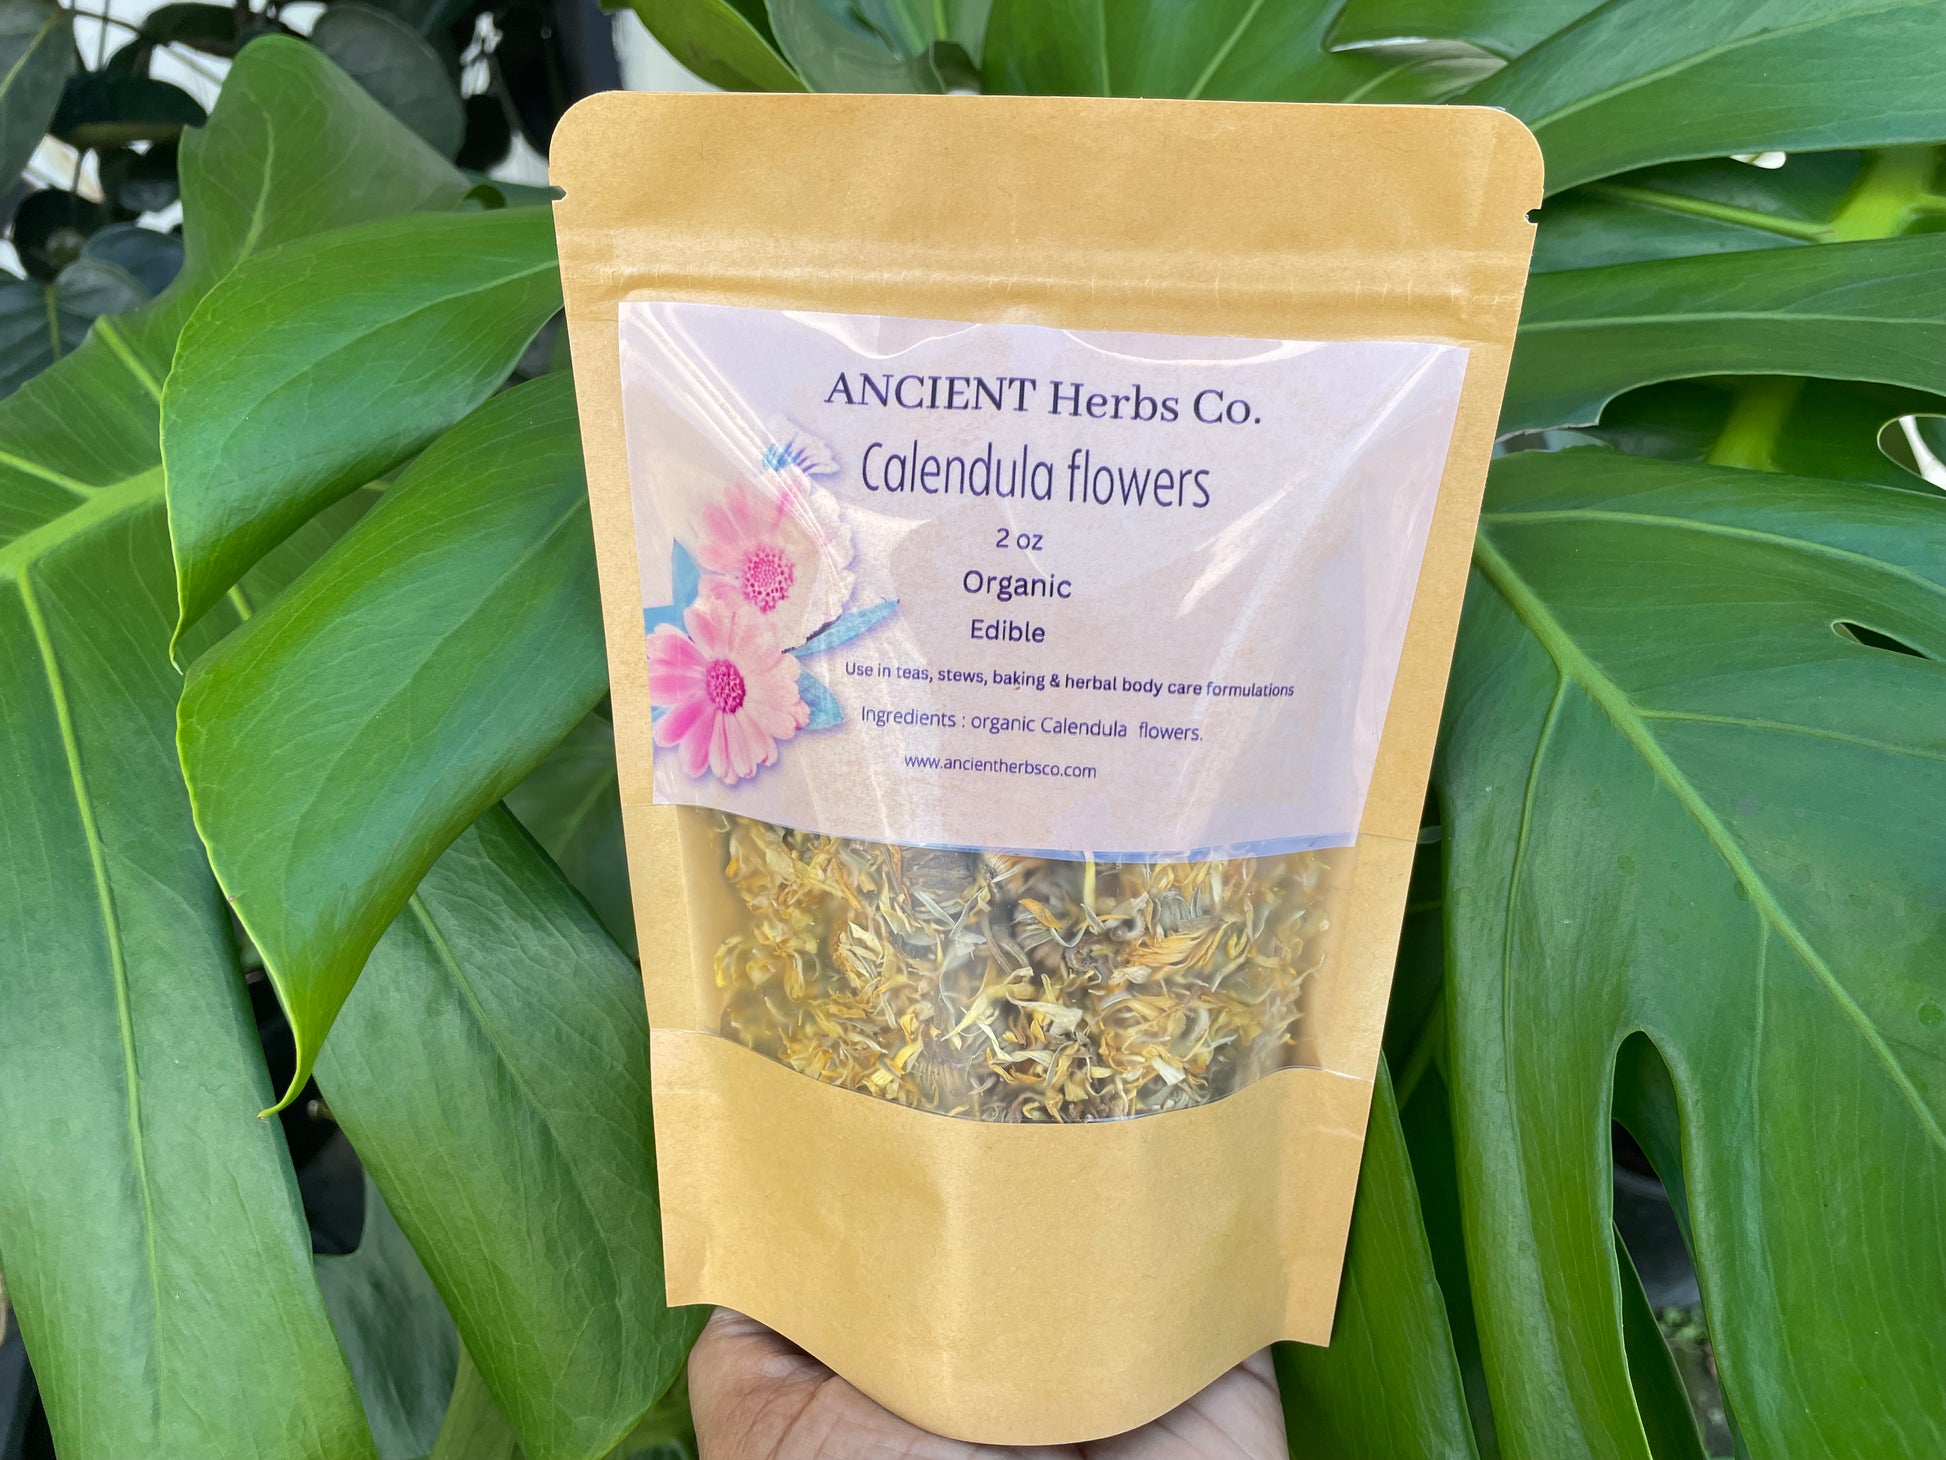 Organic Calendula Flowers